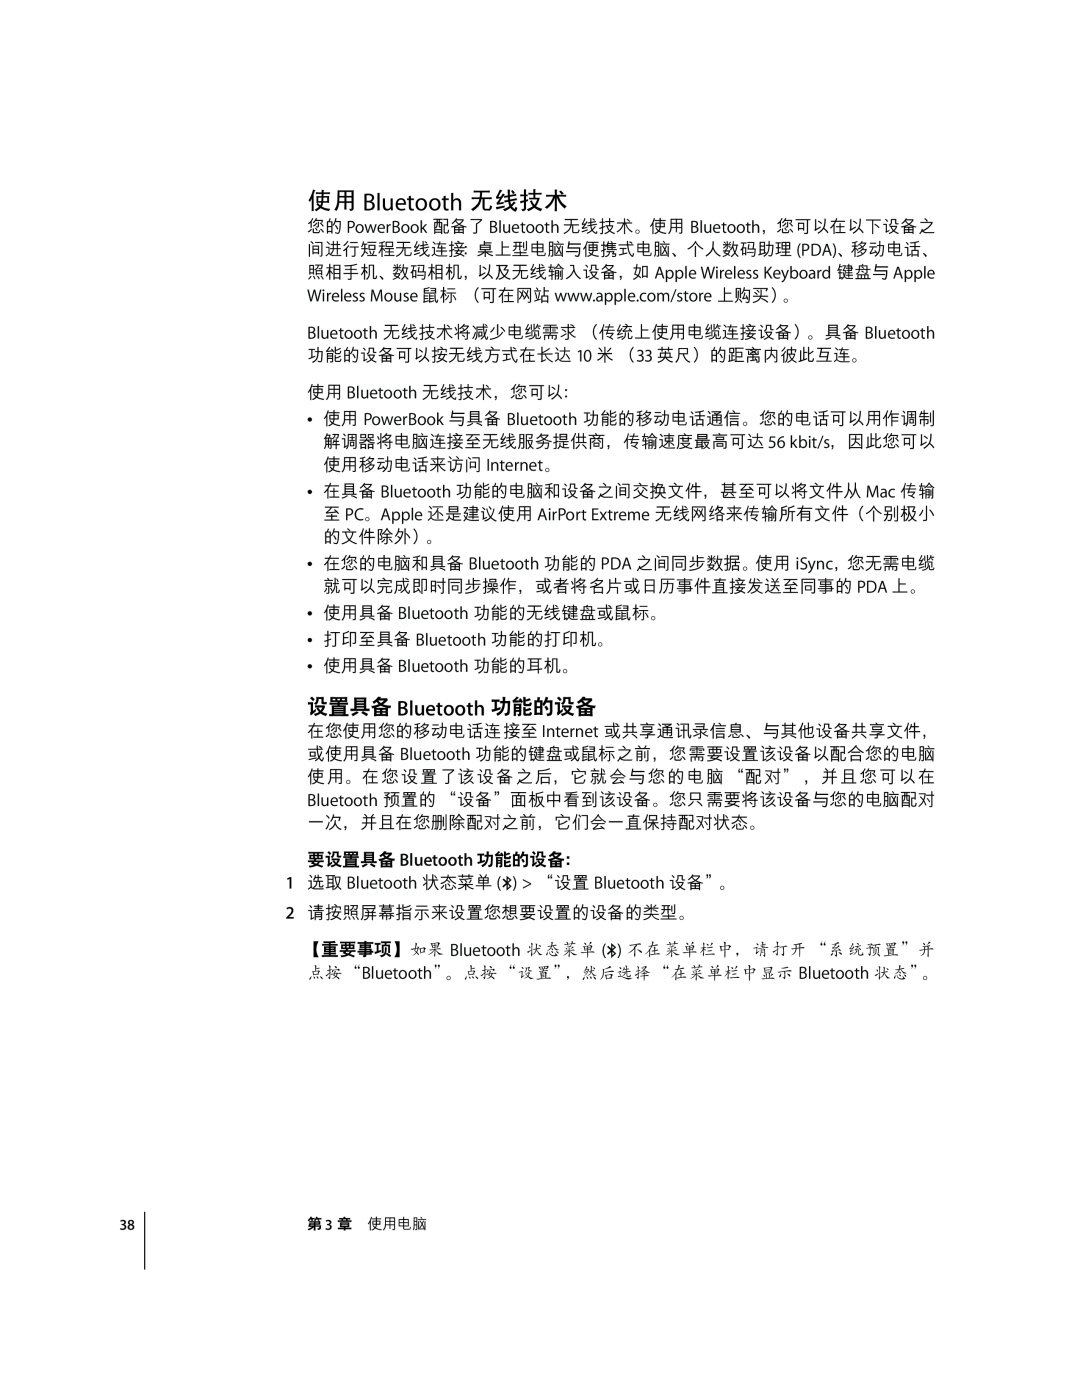 Apple G4 12 manual KL Bluetooth ˜-š, 4˜z³- Bluetooth ST-˜ 